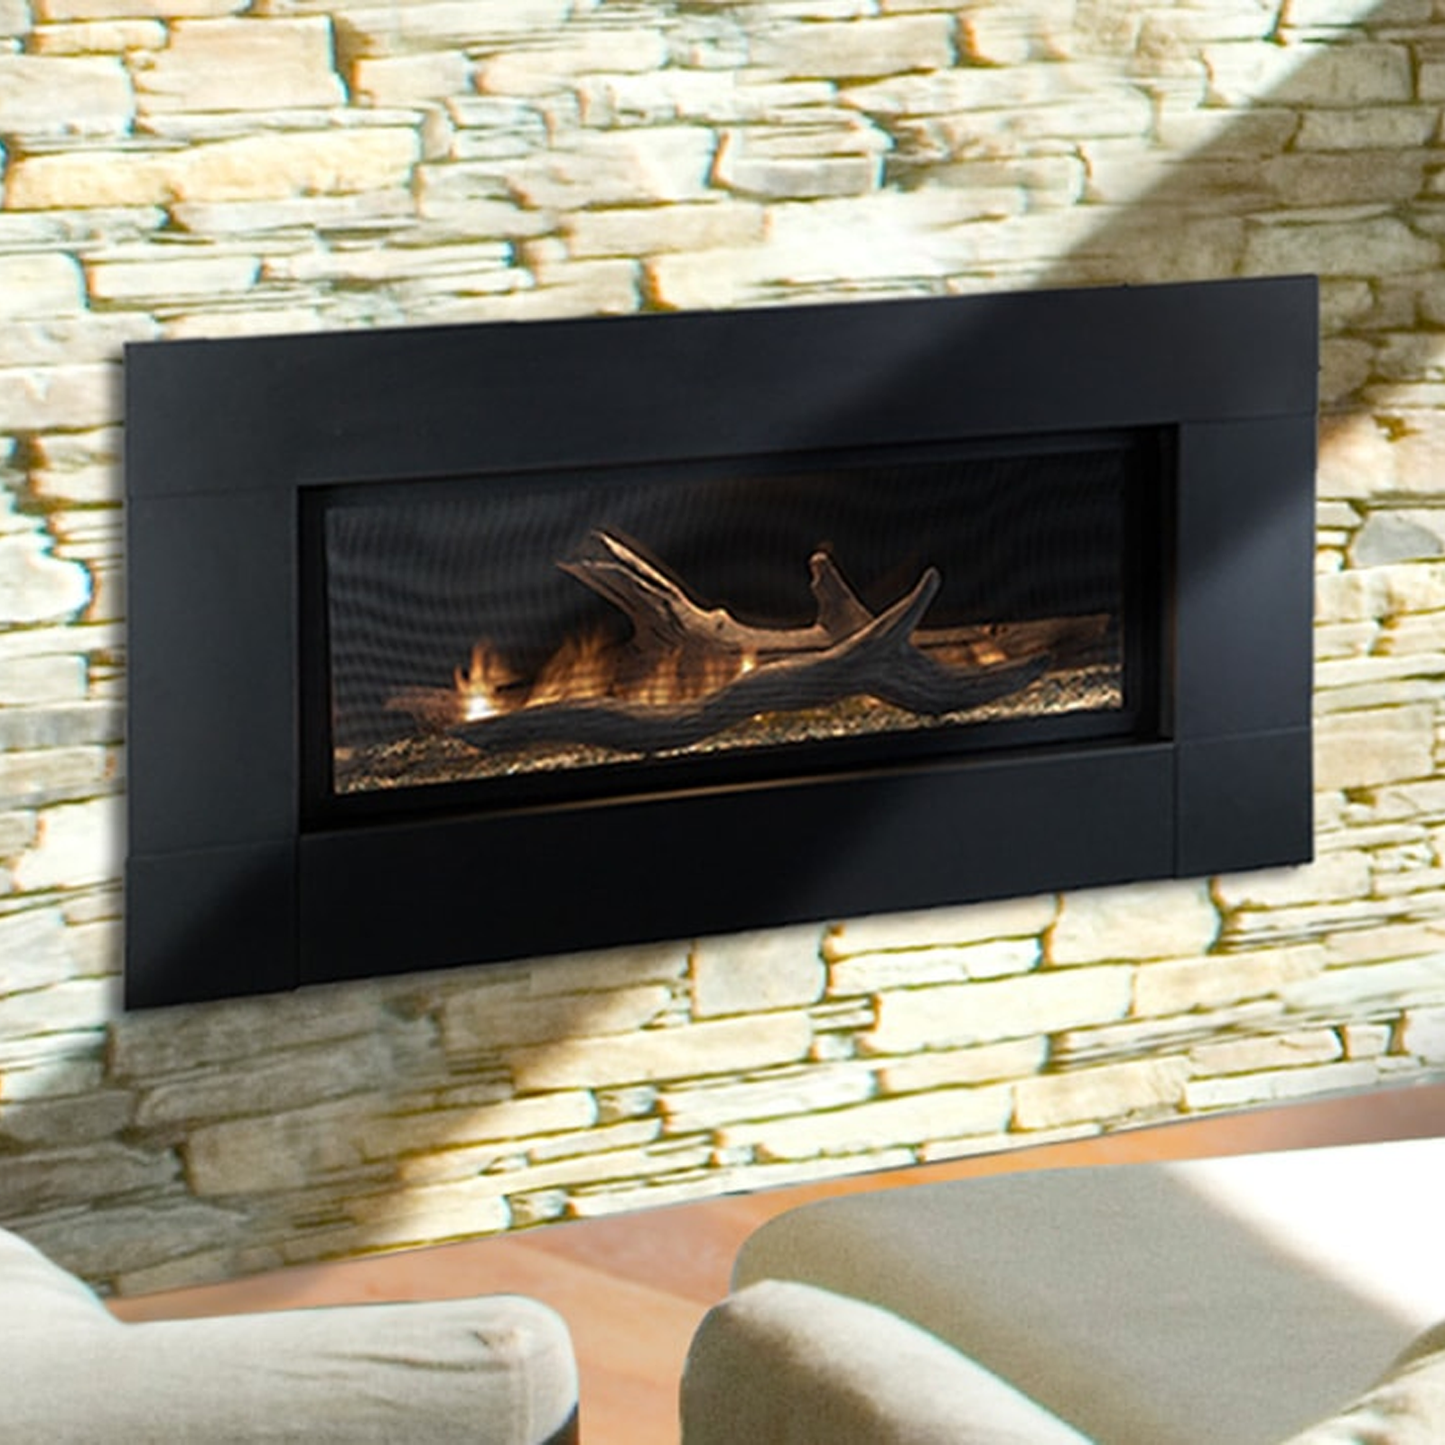 Monessen Artisan AVFL42 42" NG Vent Free Linear Fireplace | AVFL42NTSC